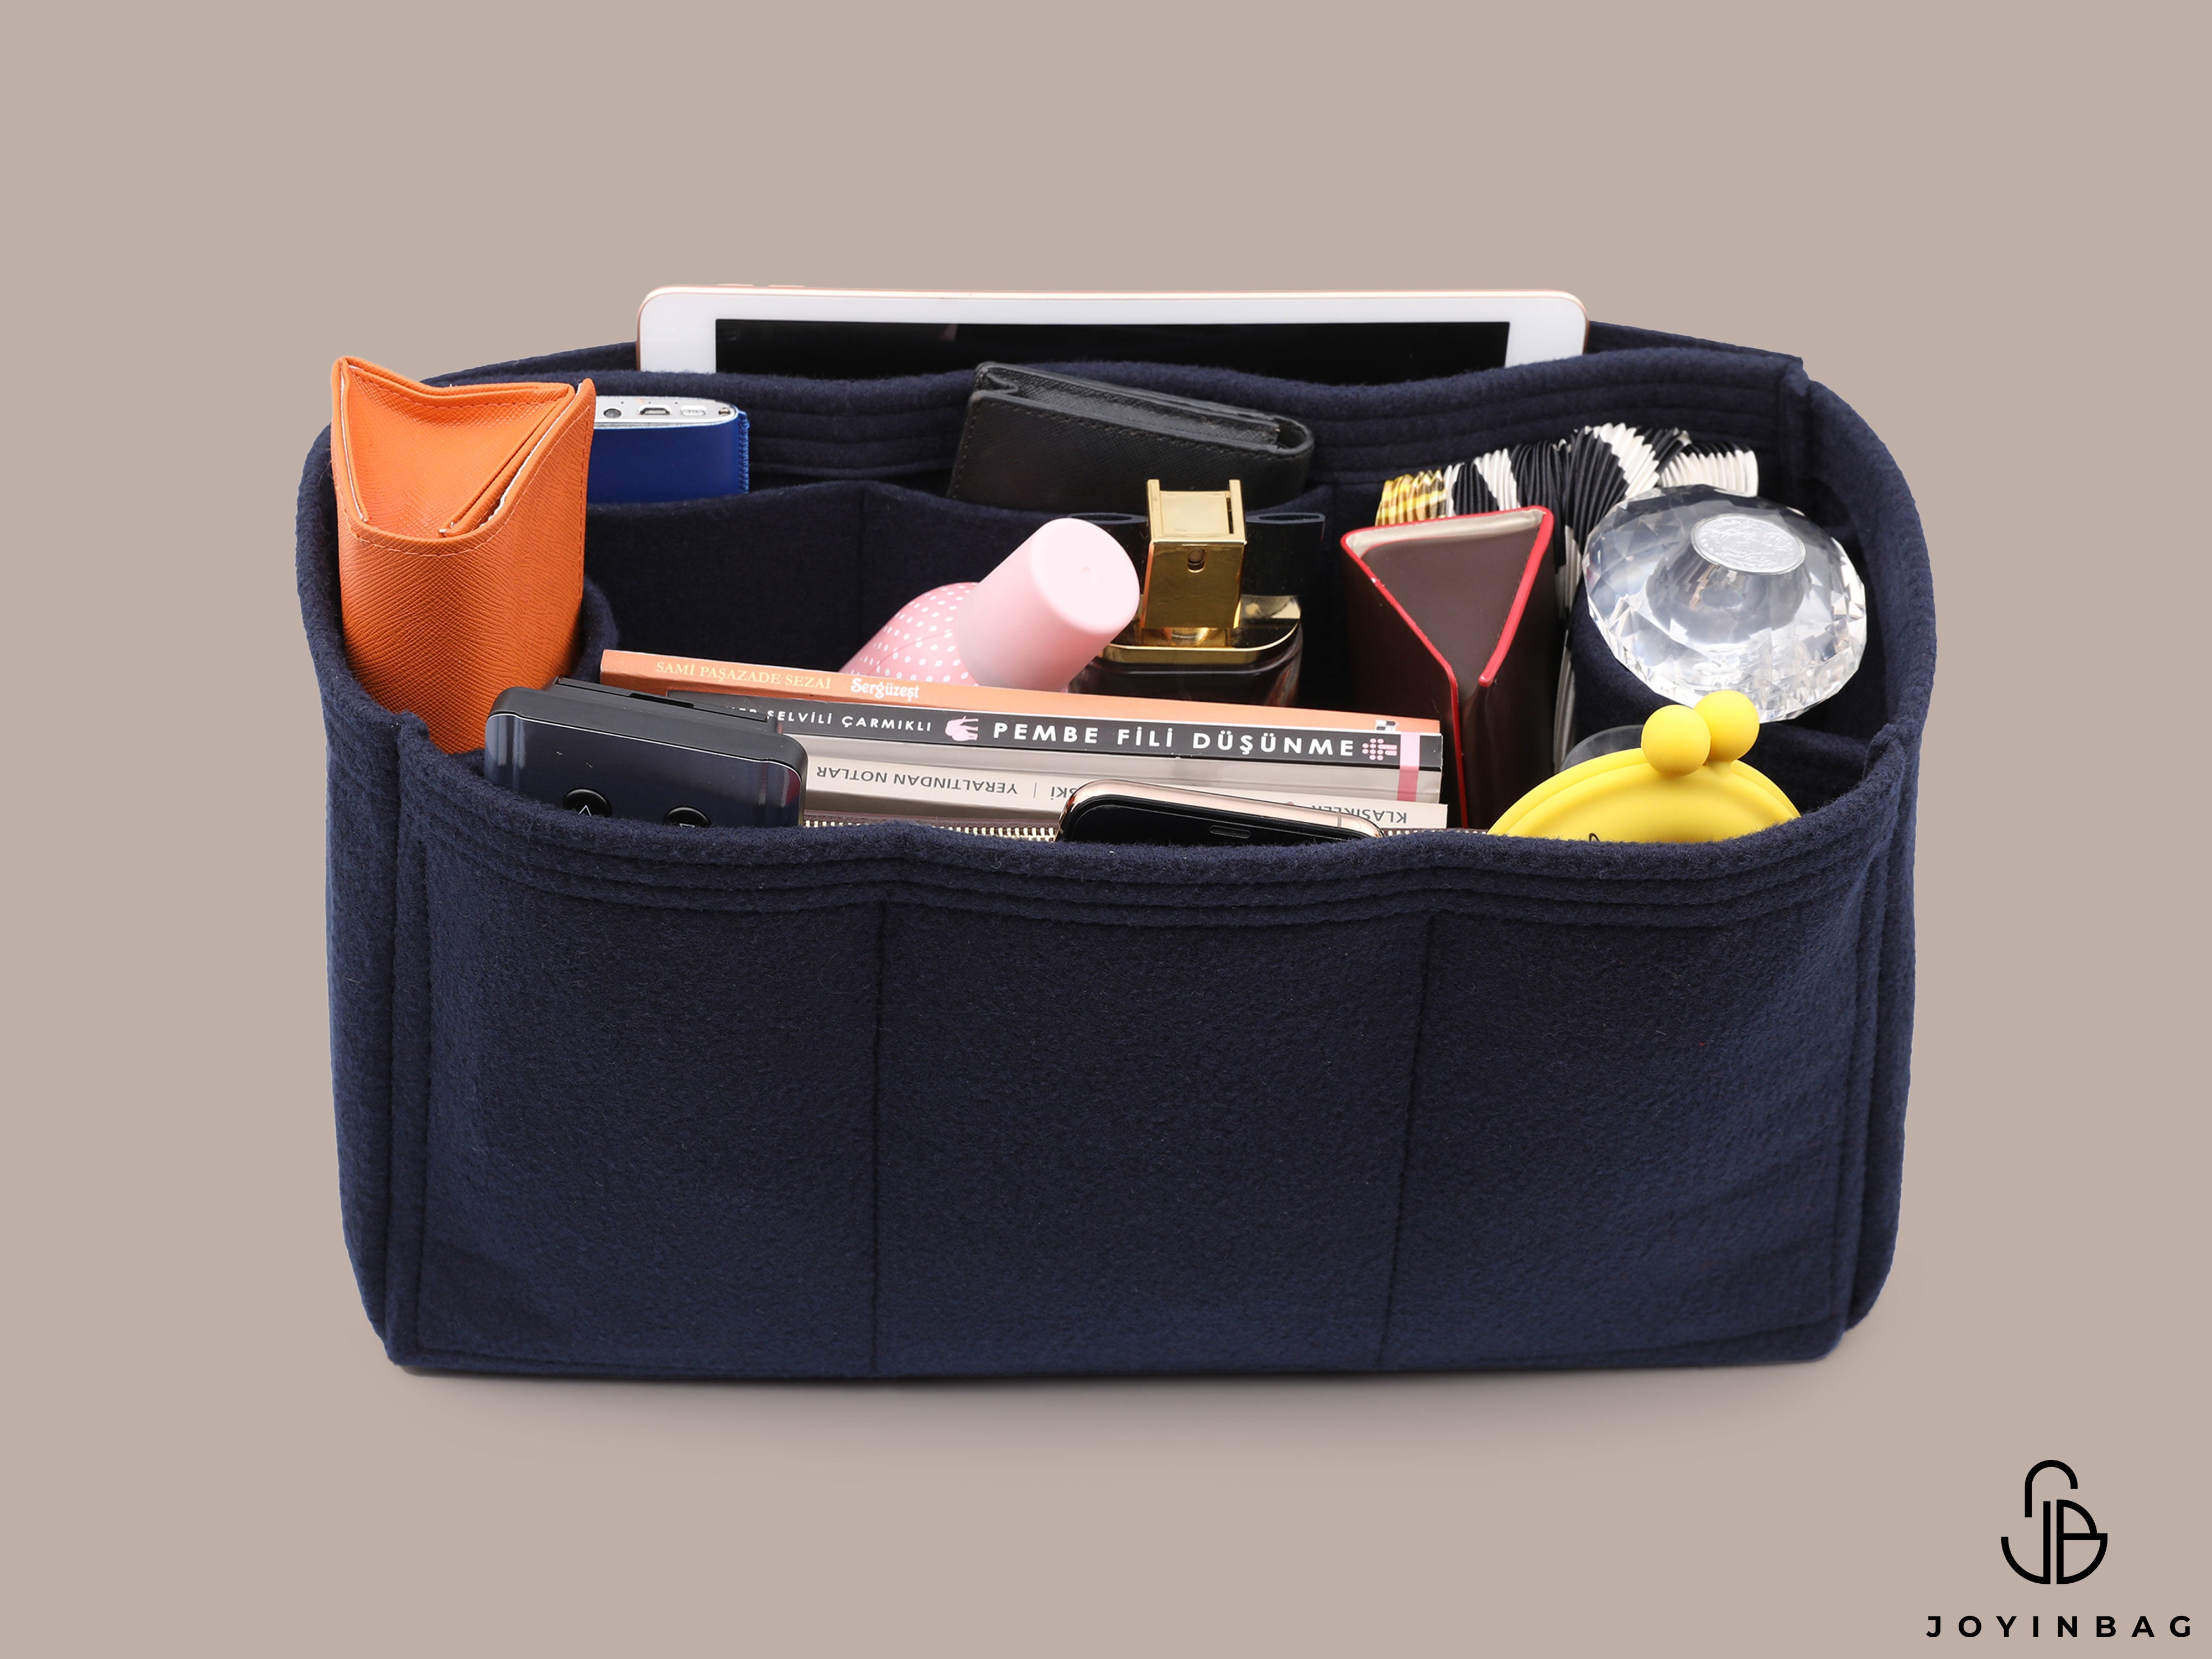 Louis Vuitton Alma Organizer Insert, Classic Model Bag Organizer with Ipad  Pocket